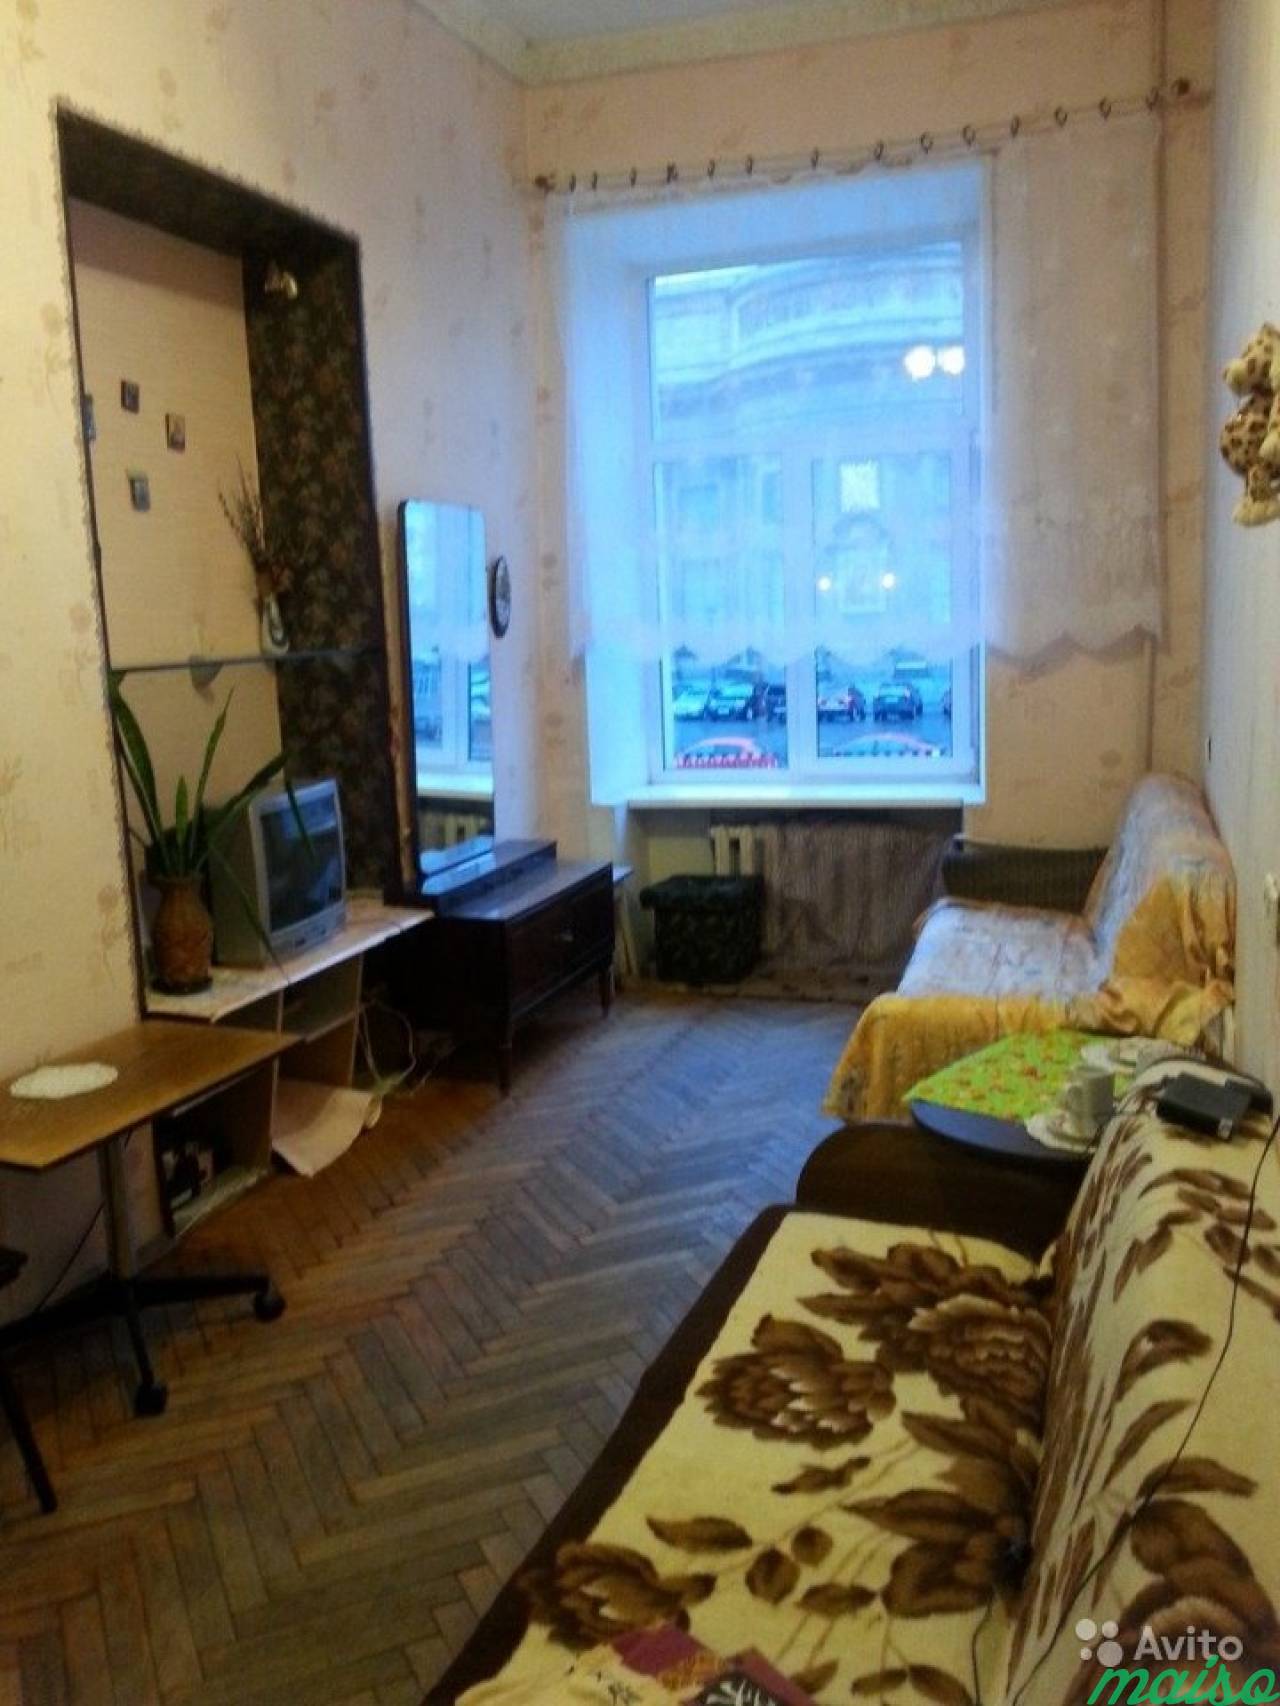 Комната 18 м² в 1-к, 2/4 эт. в Санкт-Петербурге. Фото 2